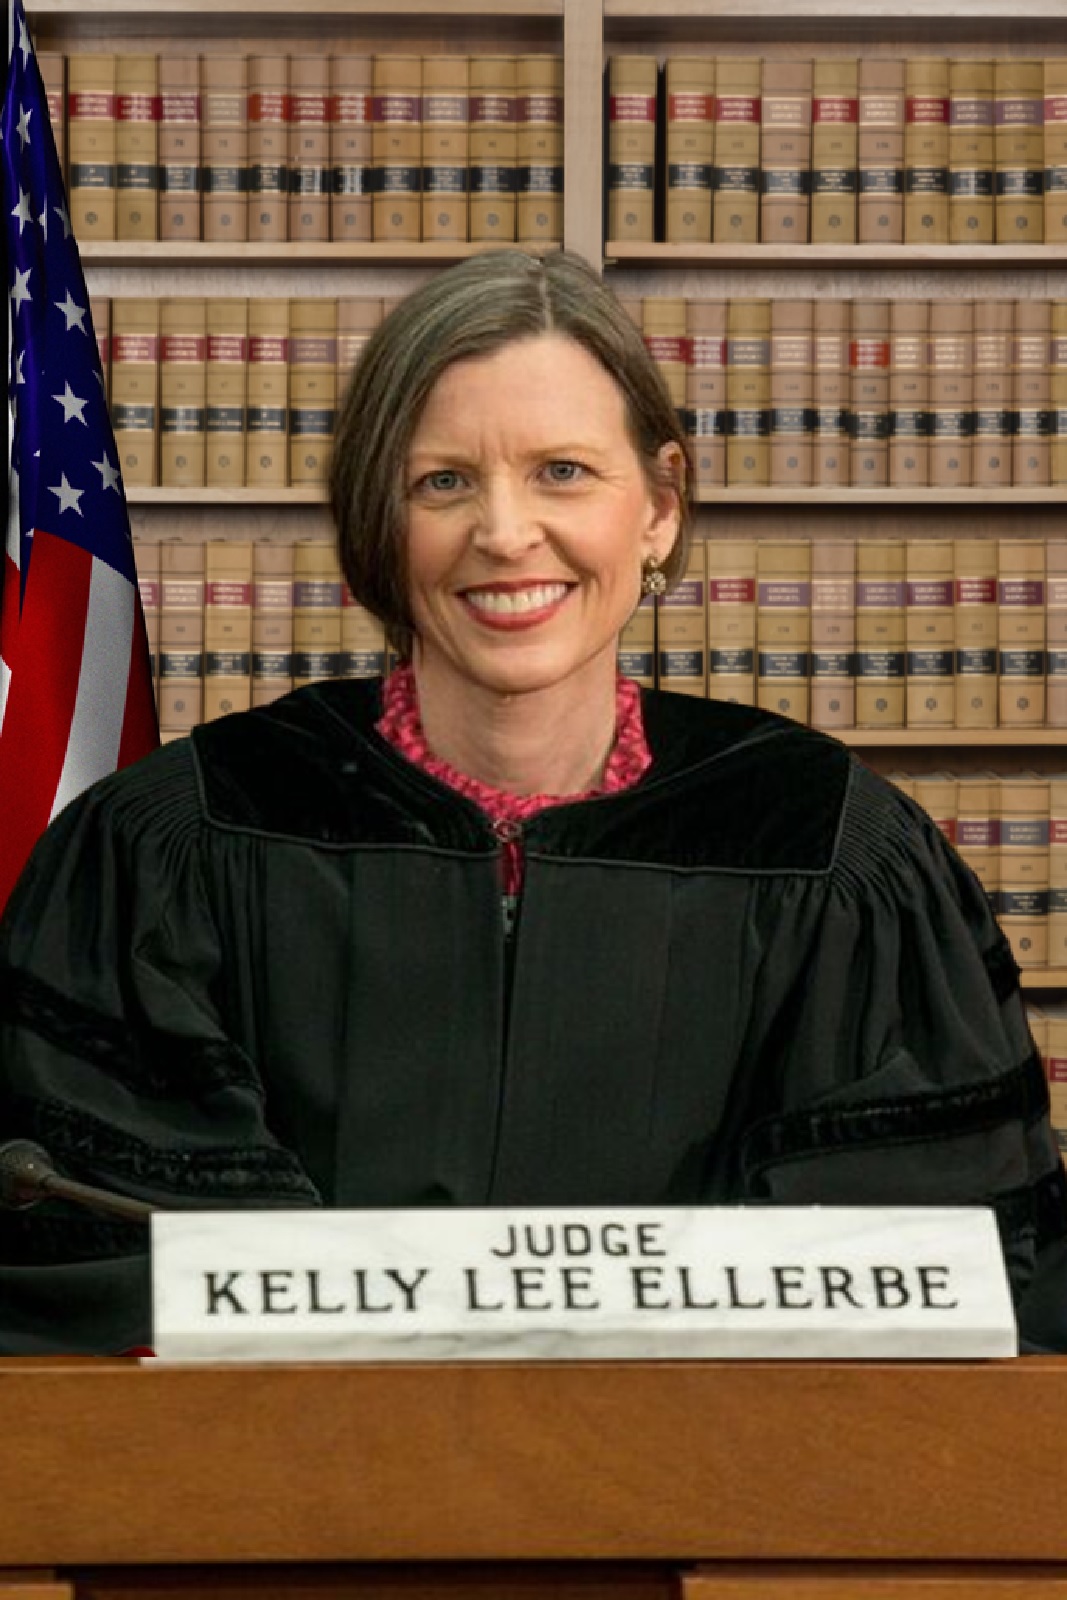 Judge Ellerbe